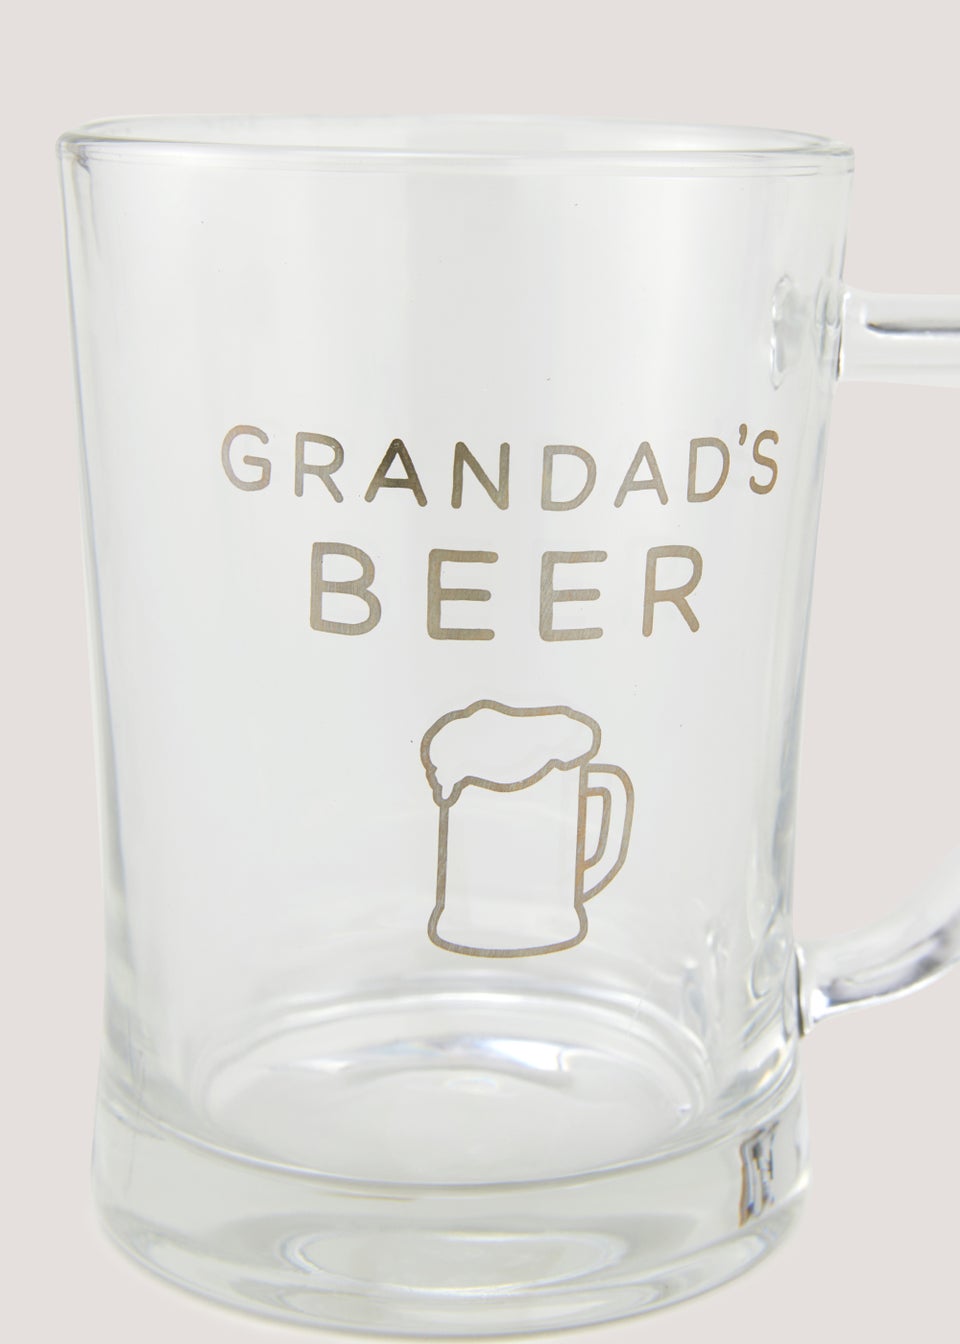 Best Grandad Premium 285ml Beer Glass